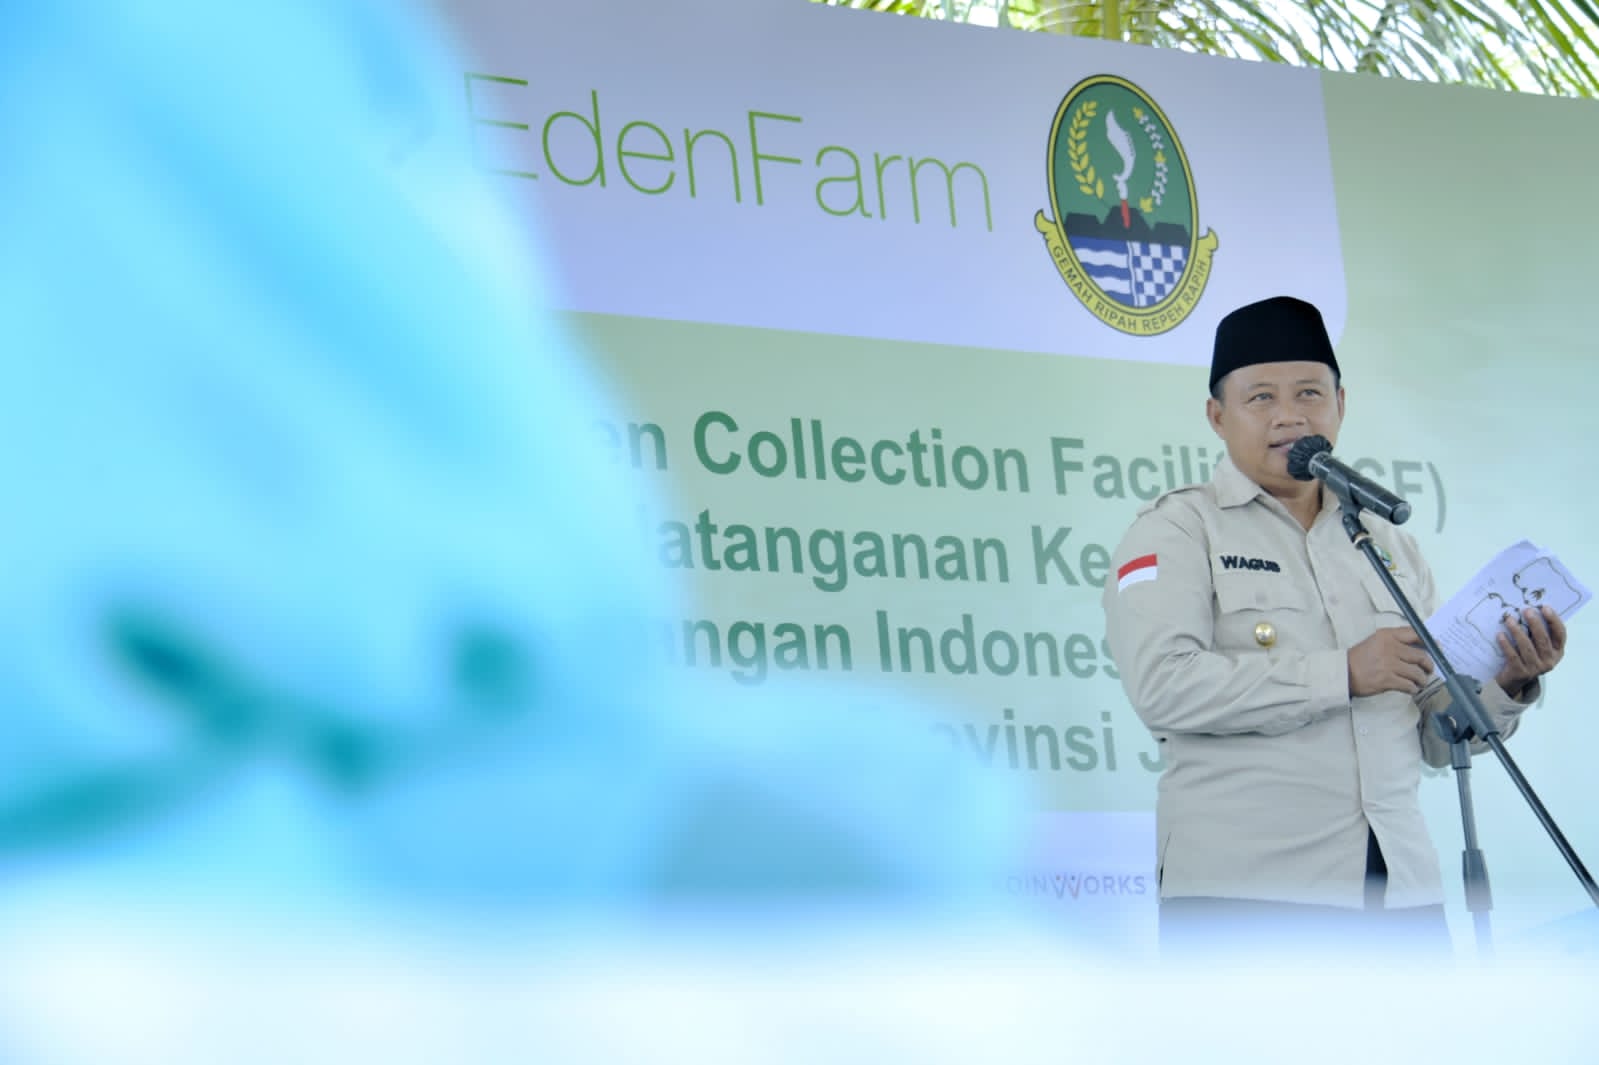 Jawa Barat dan EdenFarm Teken MoU, Komitmen Serap Produksi Panen Petani Milenial